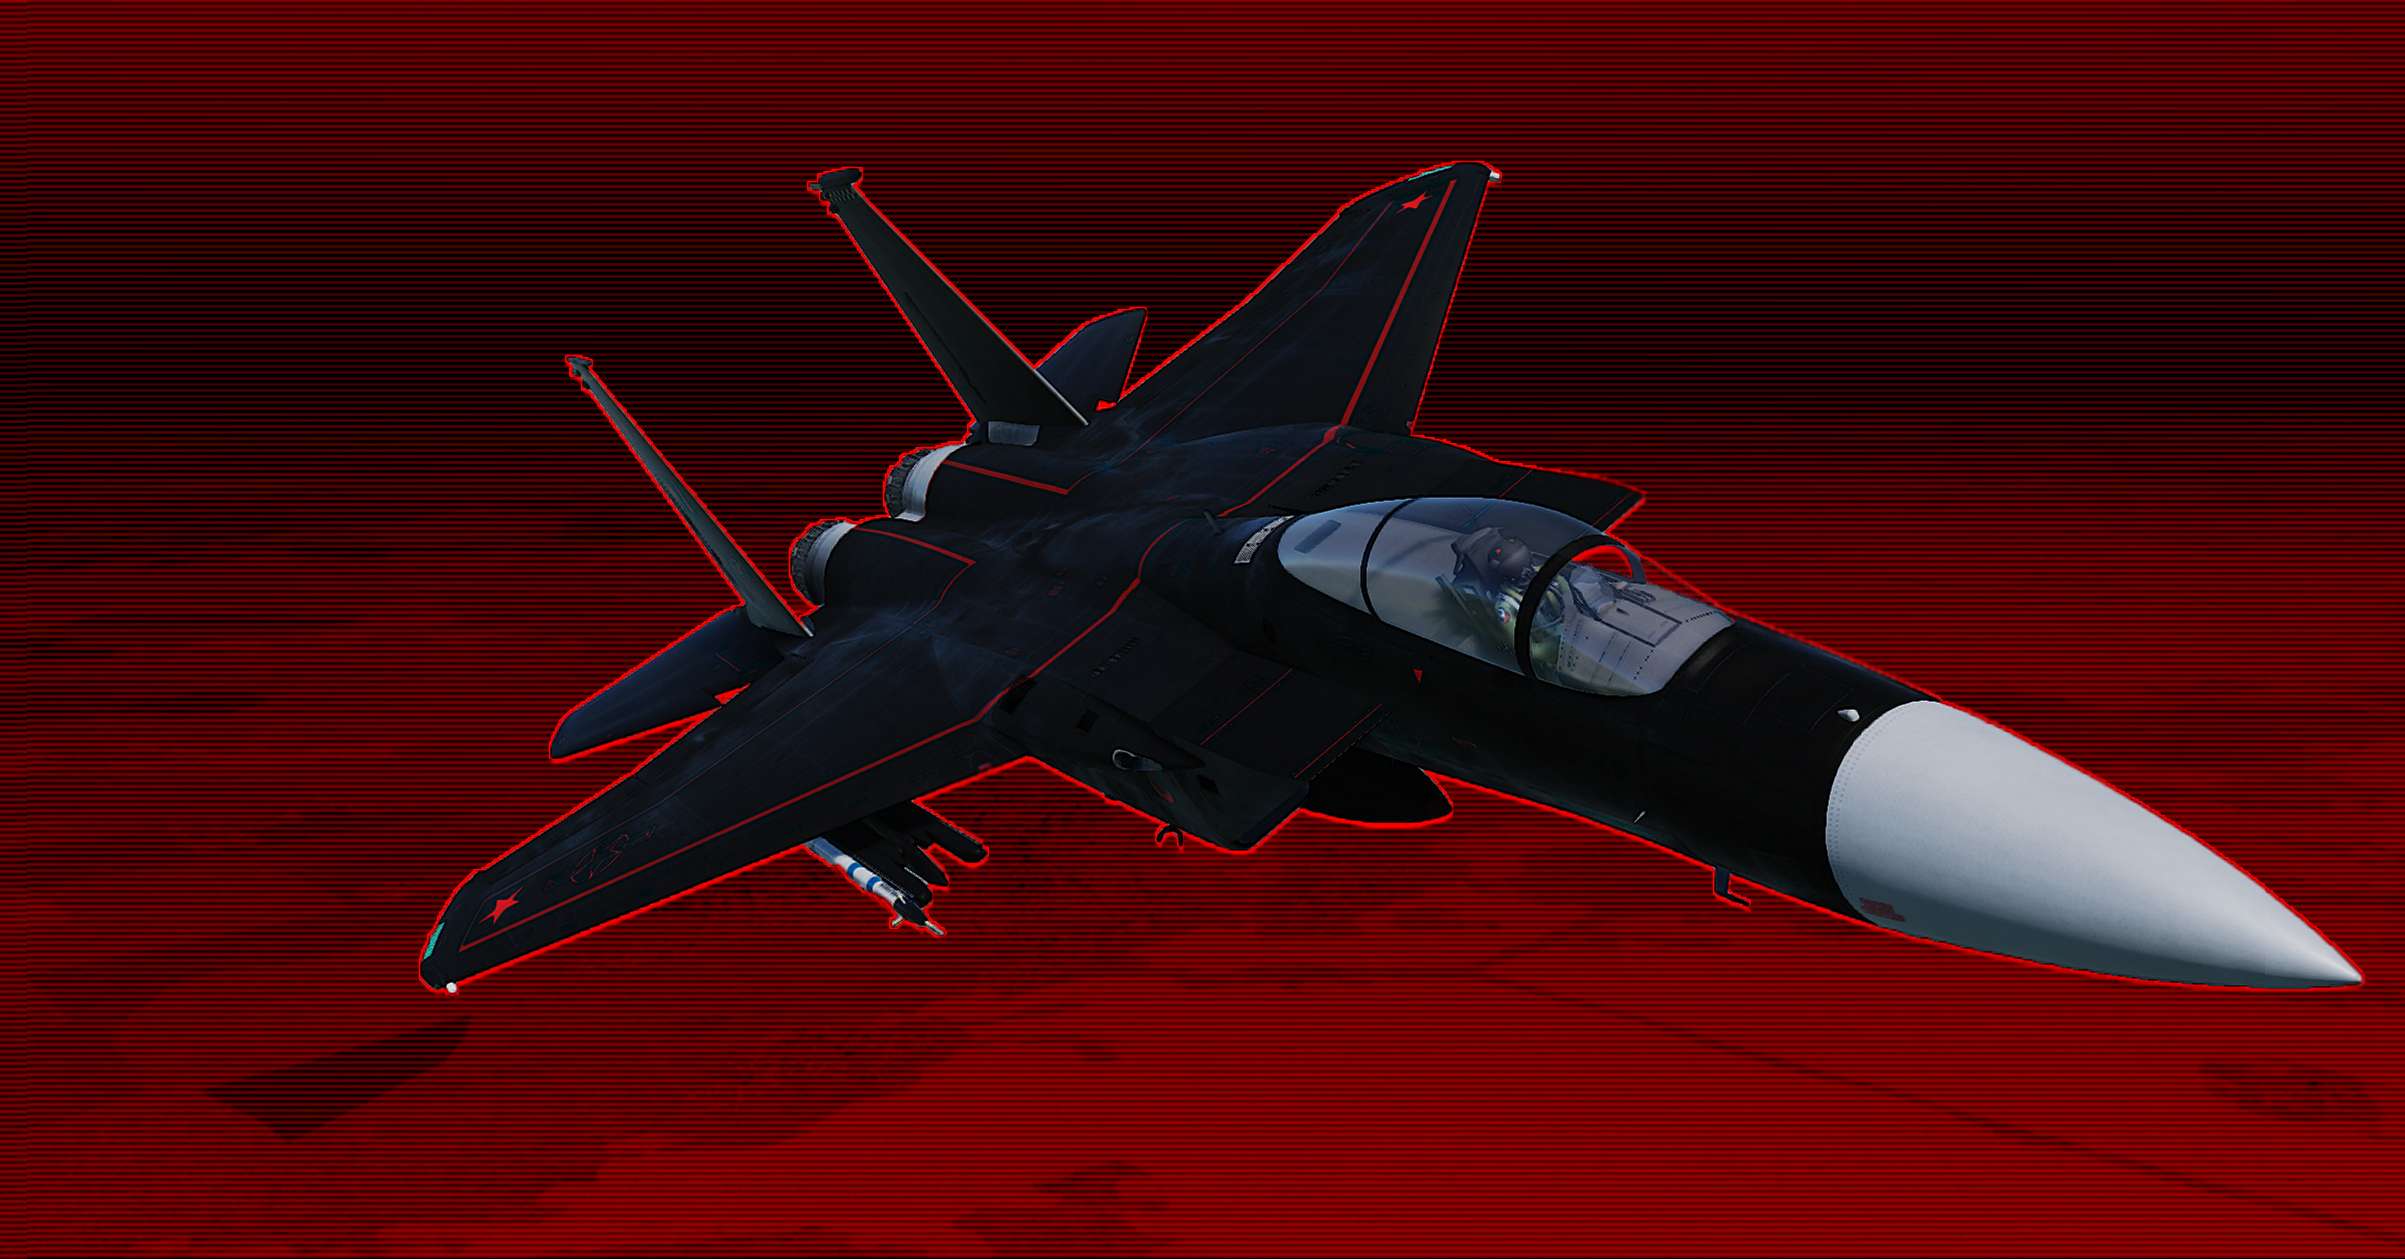 F-15C 65th Aggressor SQN "Wraith" (Fictional)